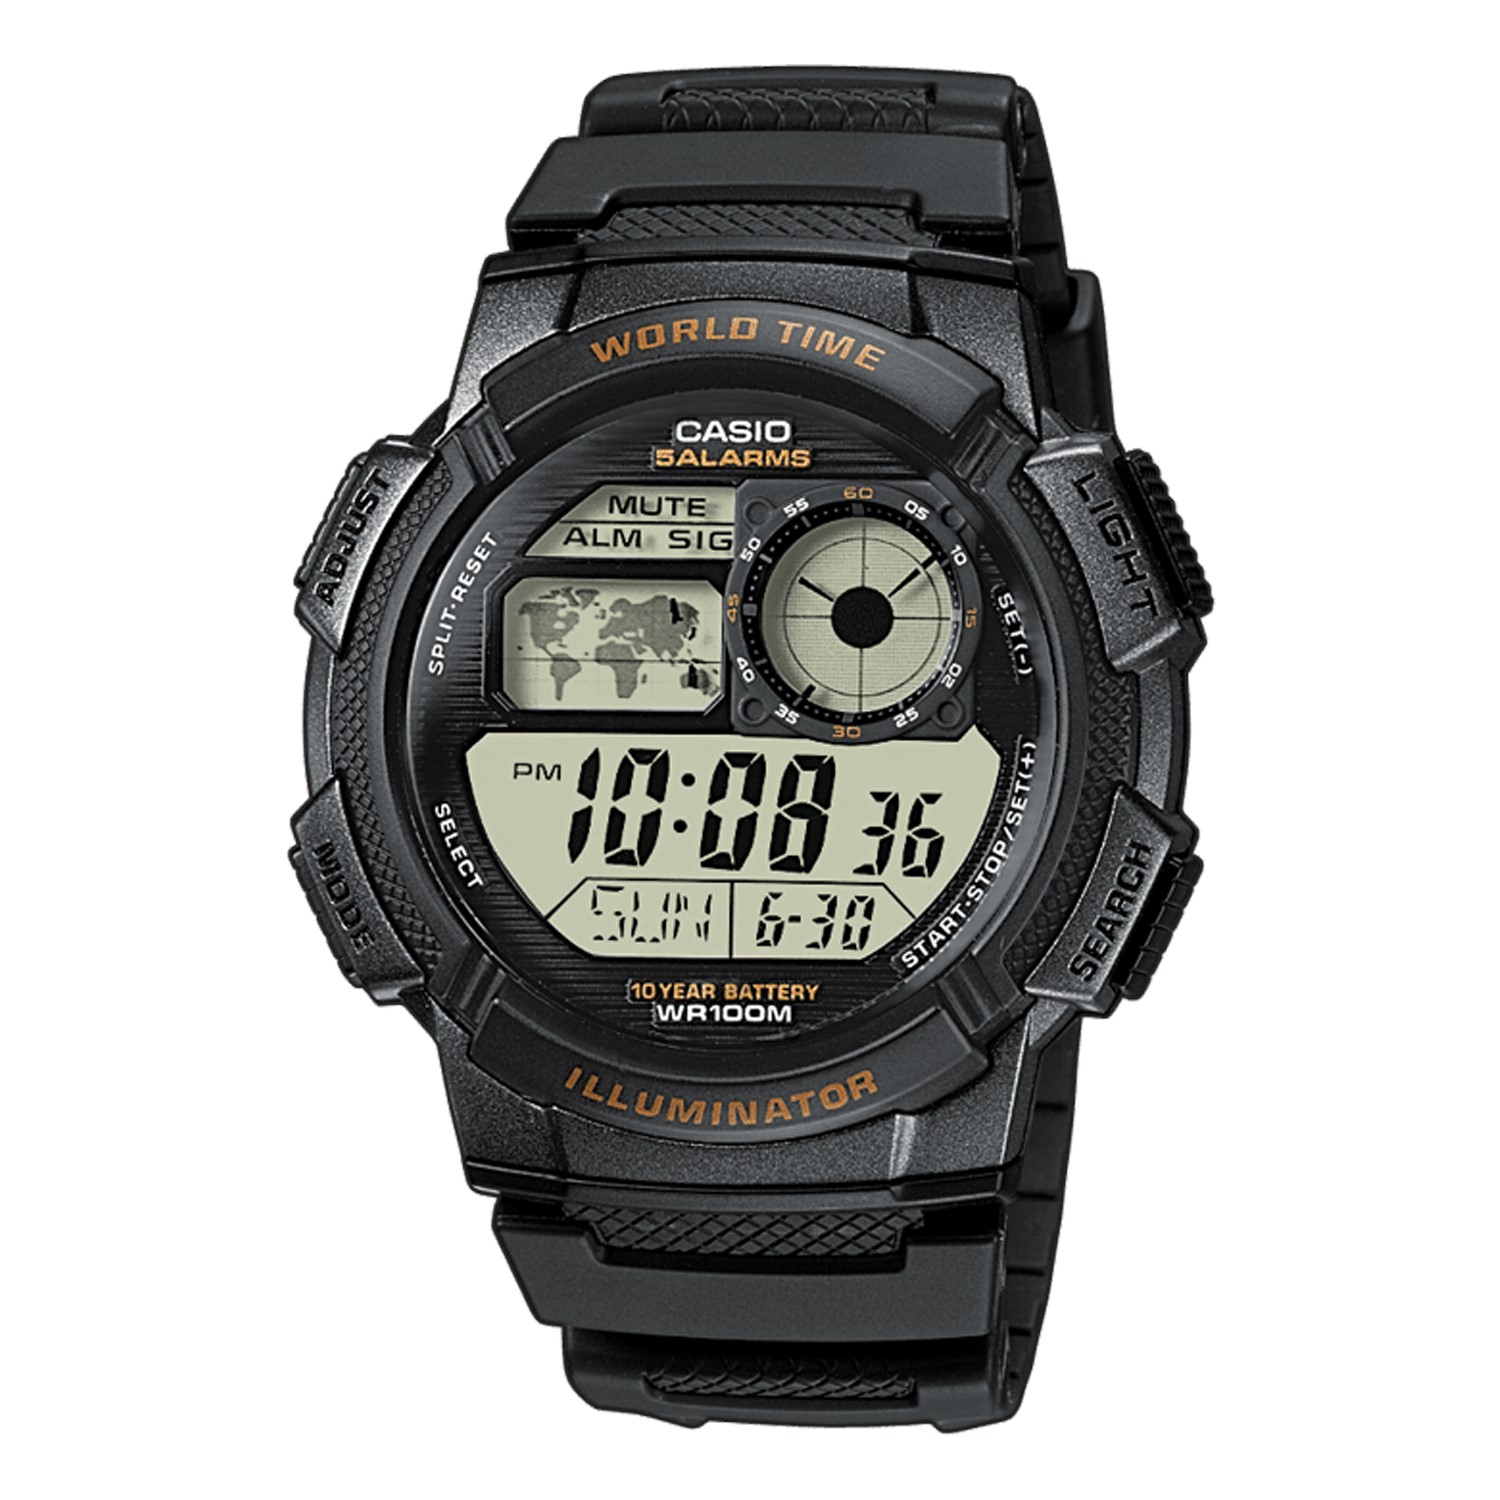 Casio Digitaal Heren Horloge zwart resin AE-1500WH-1AVEF